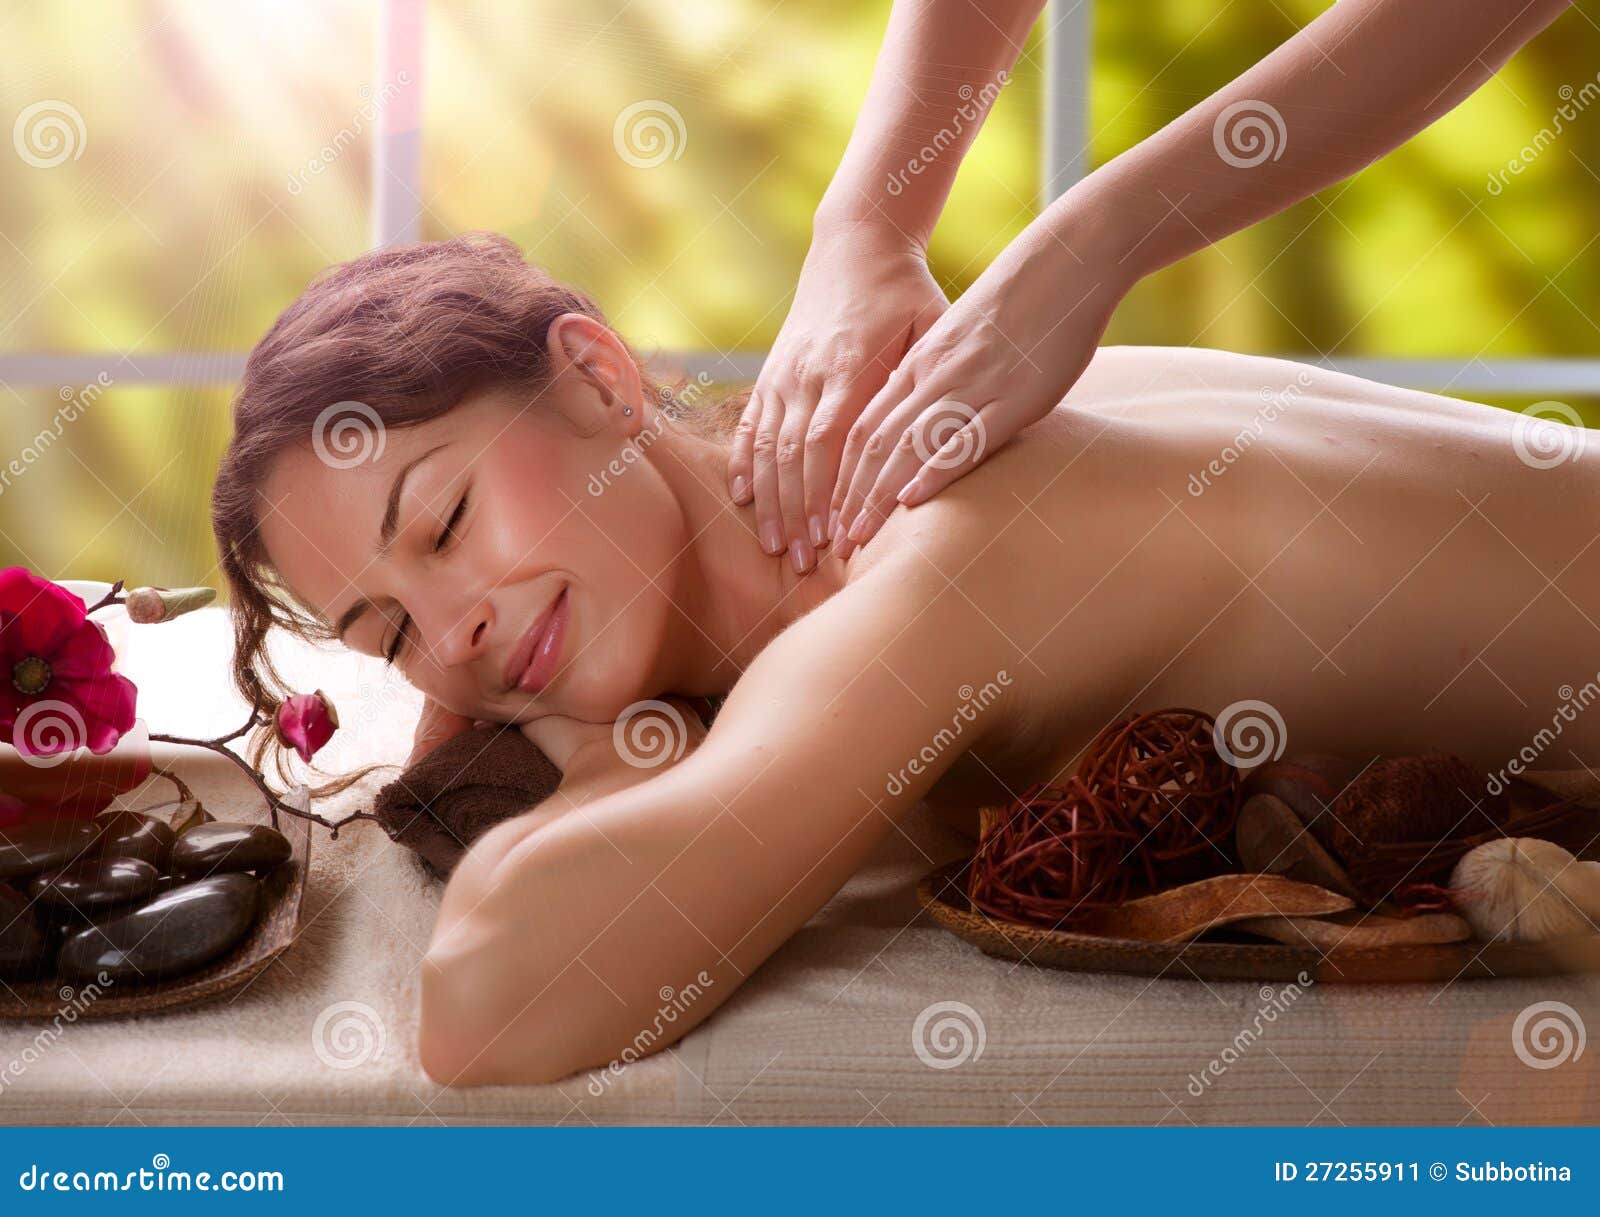 massage. spa salon